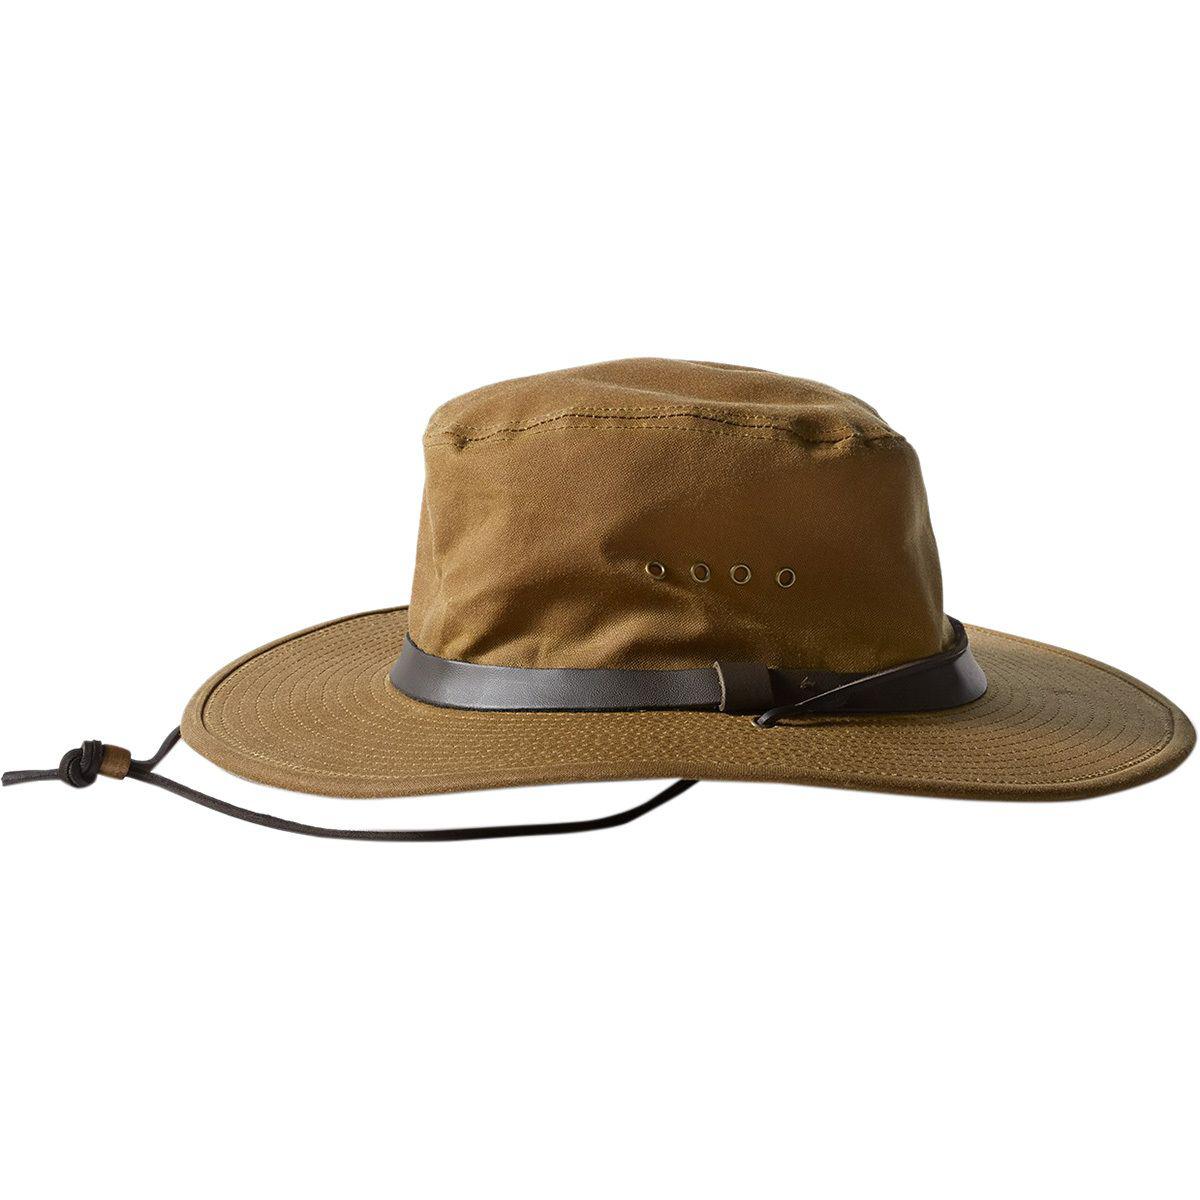 Filson Tin Cloth Bush Hat in Dark Tan (Brown) for Men - Lyst